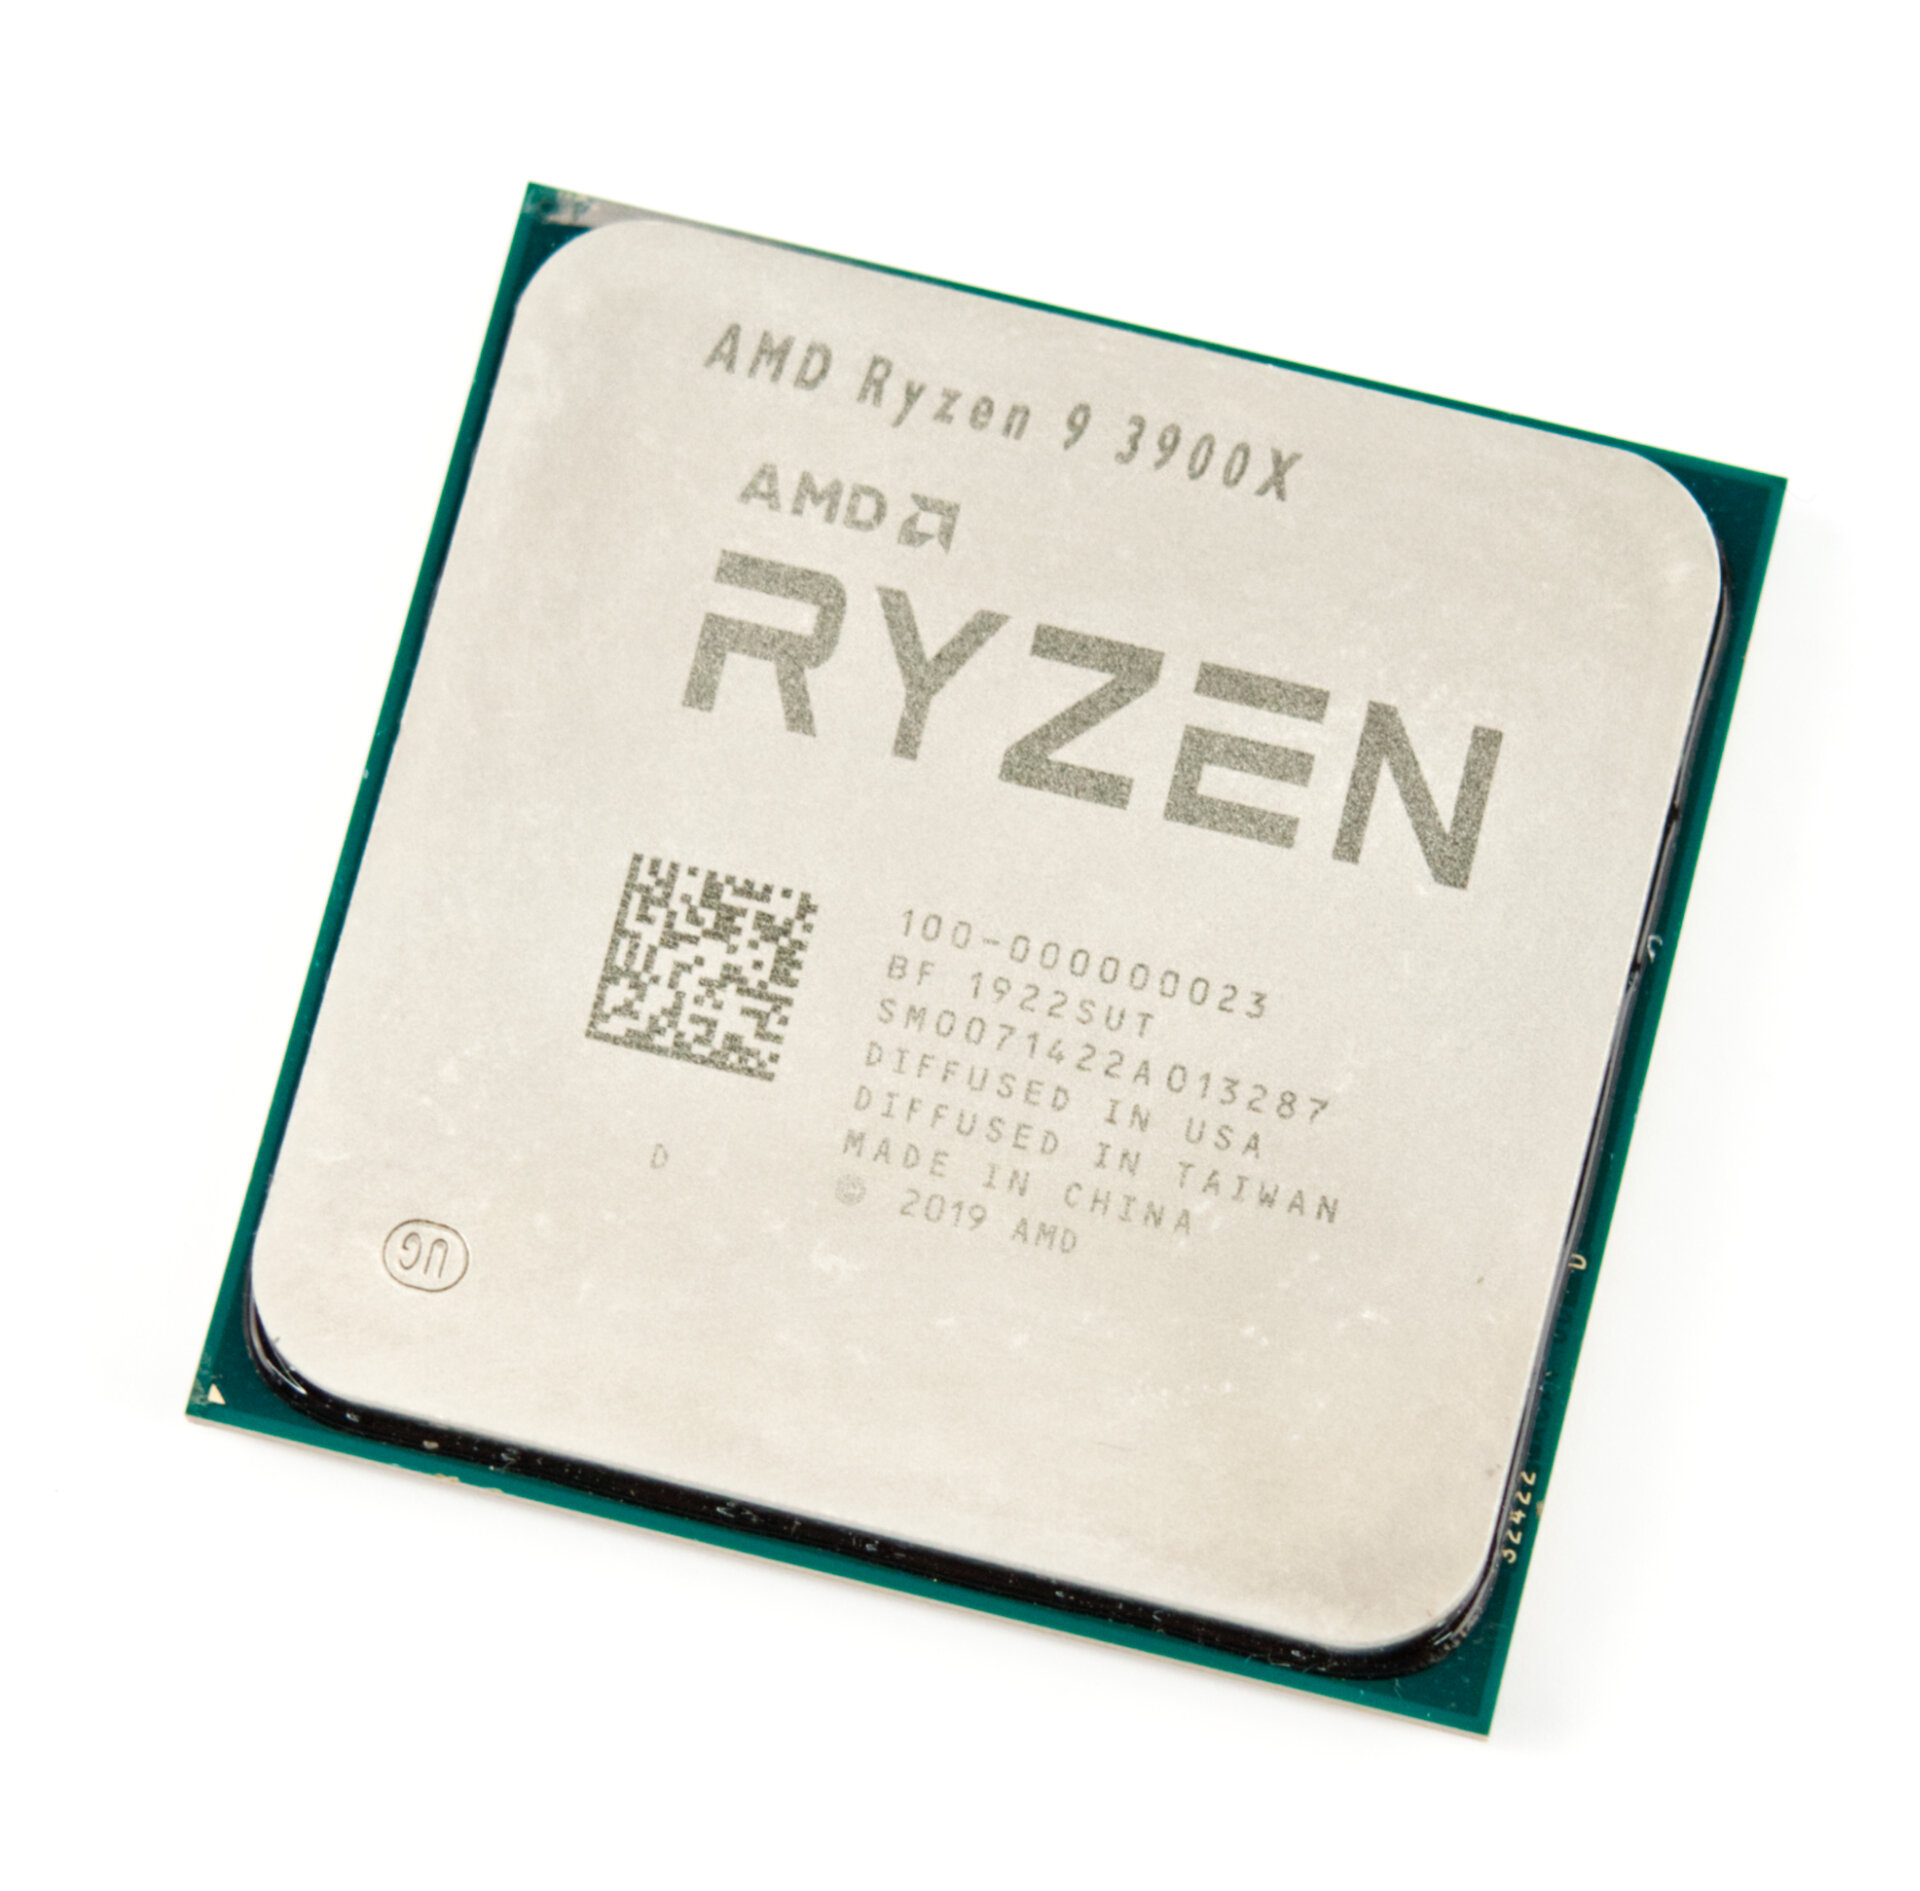 Процессор AMD Ryzen 9 3900X AM4 12 x 3800 МГц